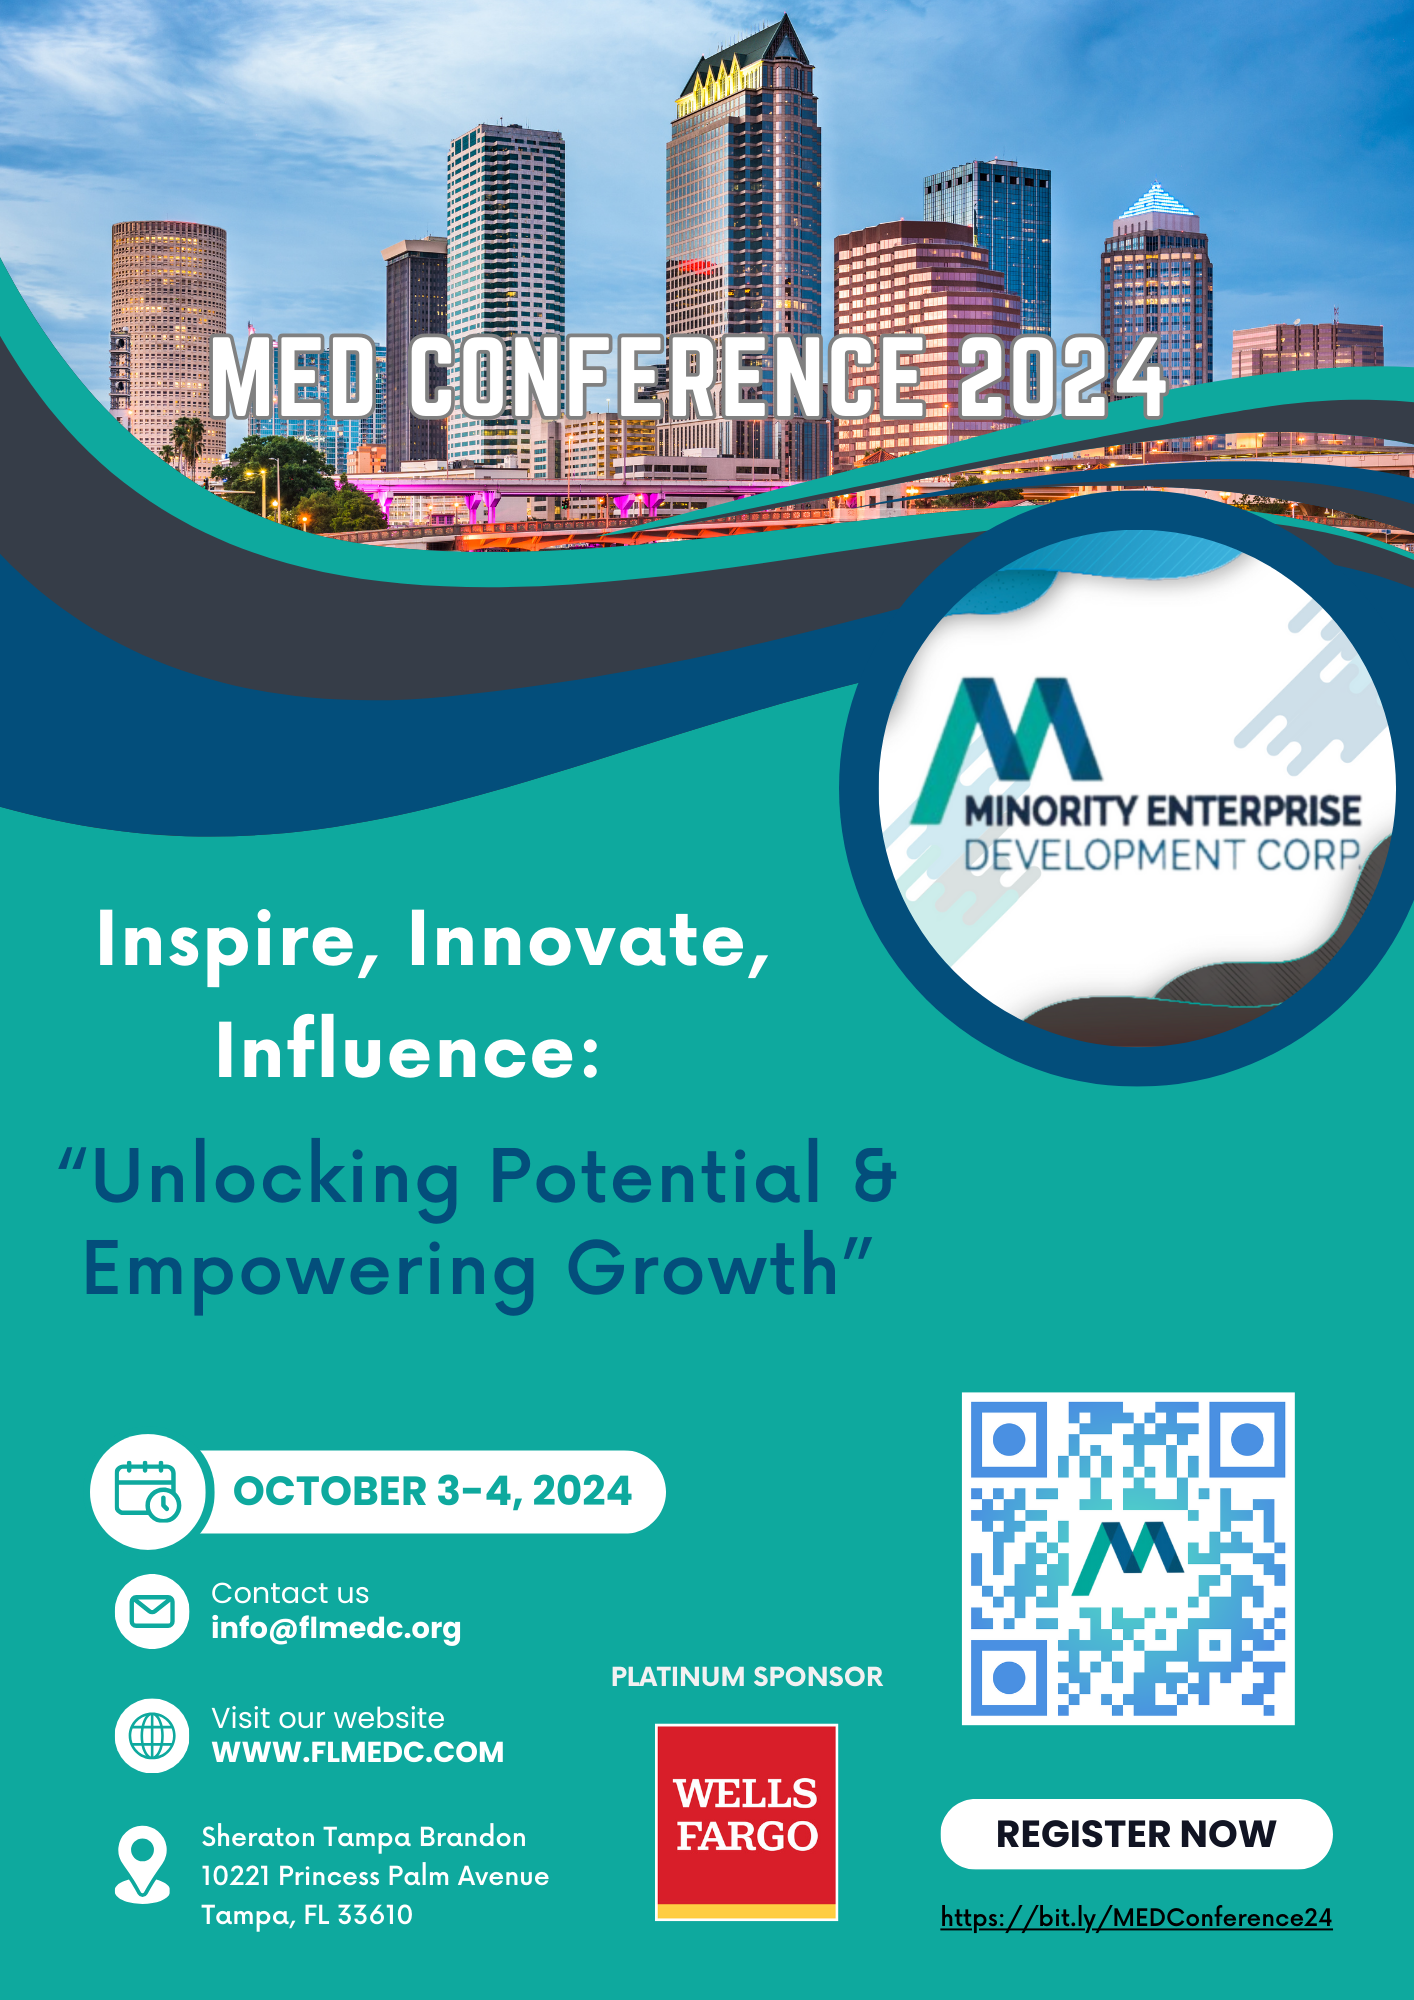 MEDC Annual Conference 2024